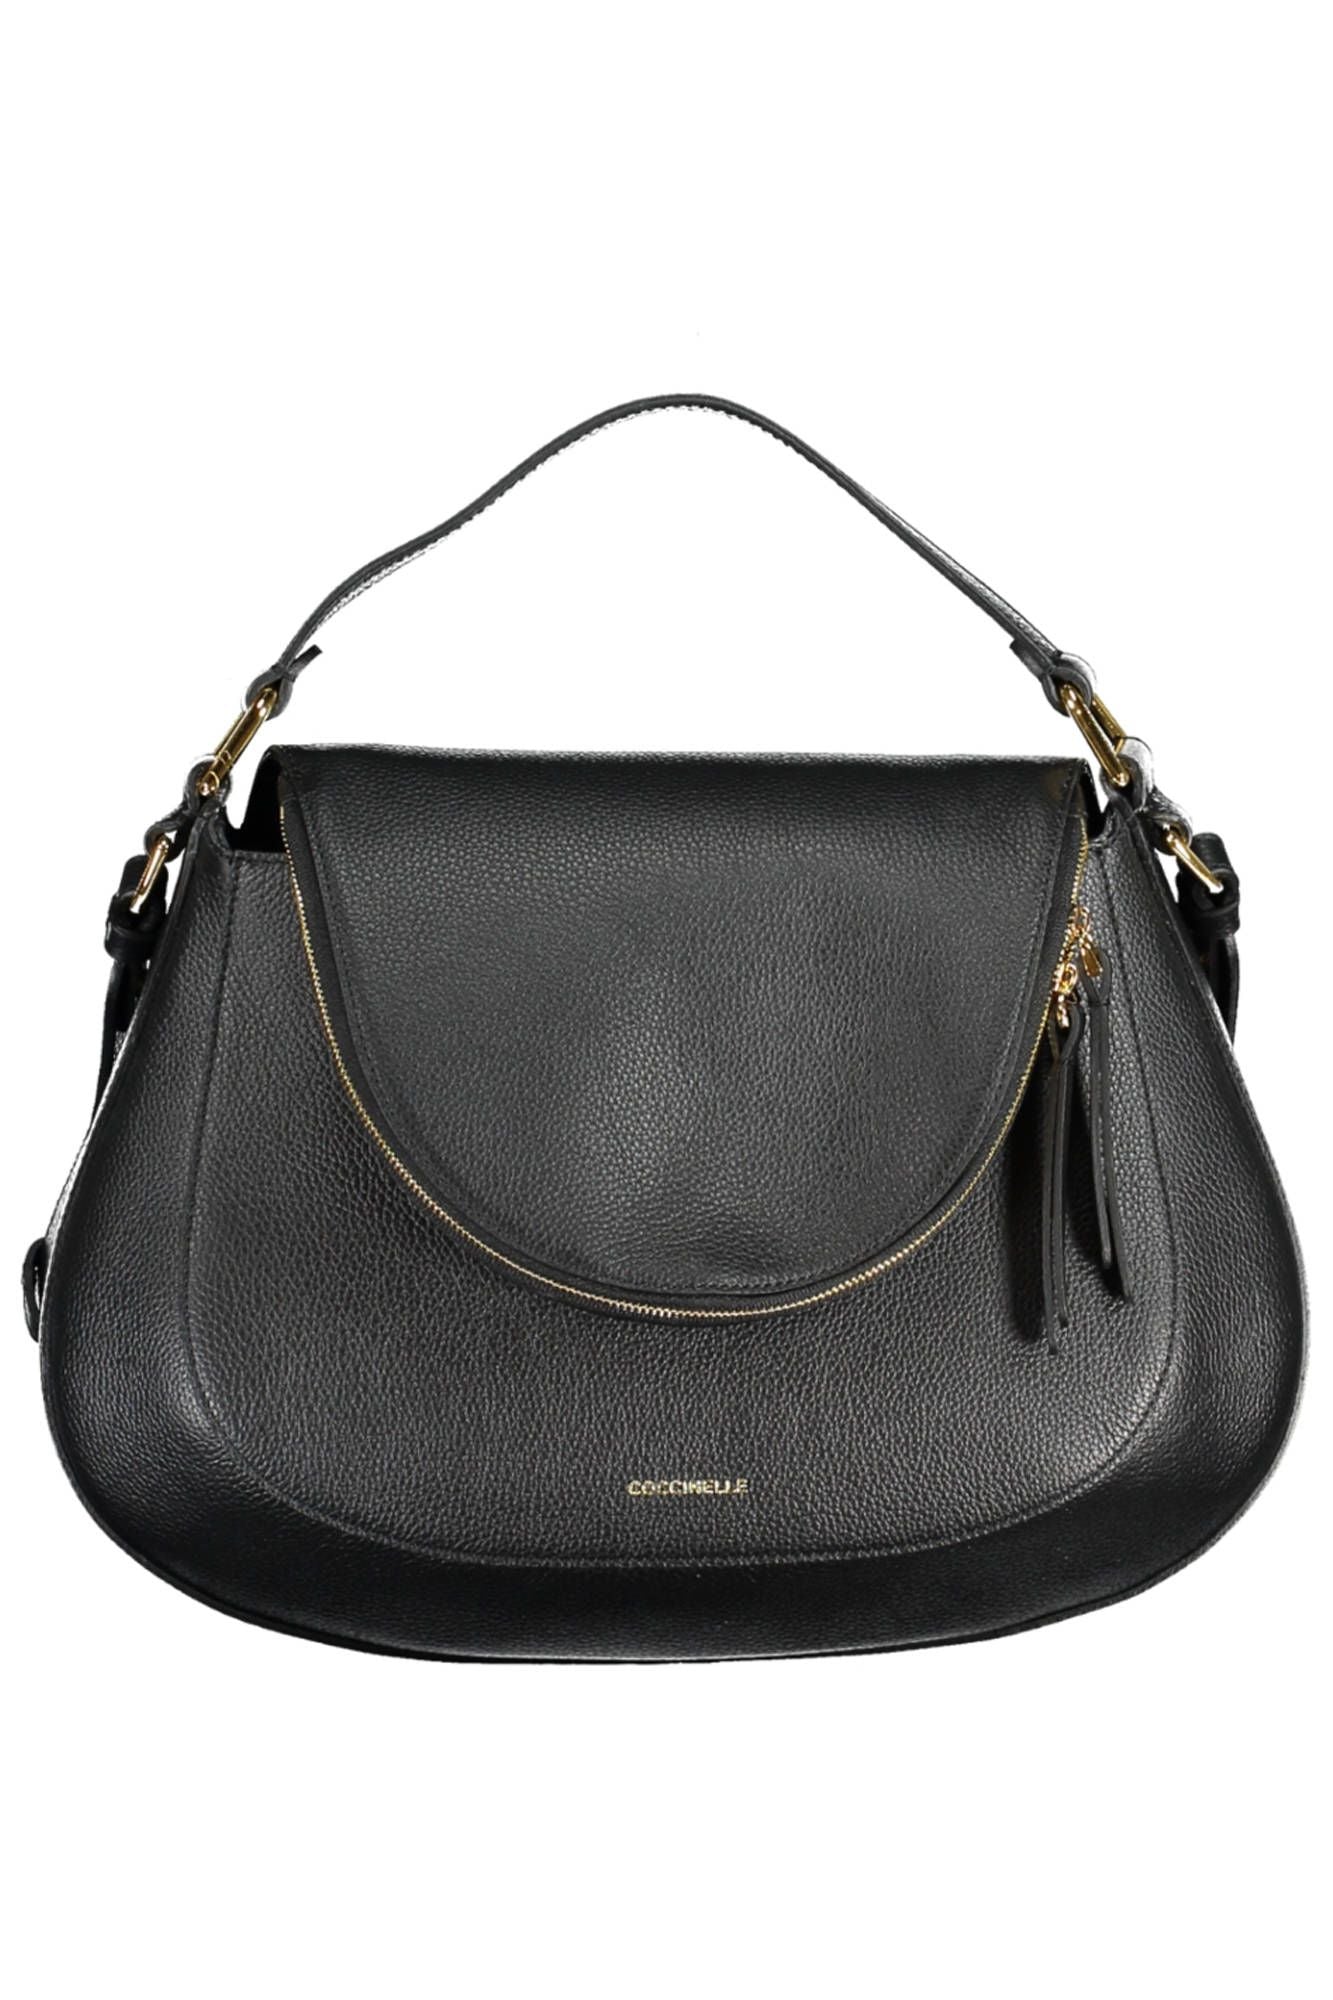 Elegant Black Leather Handbag with Versatile Strap